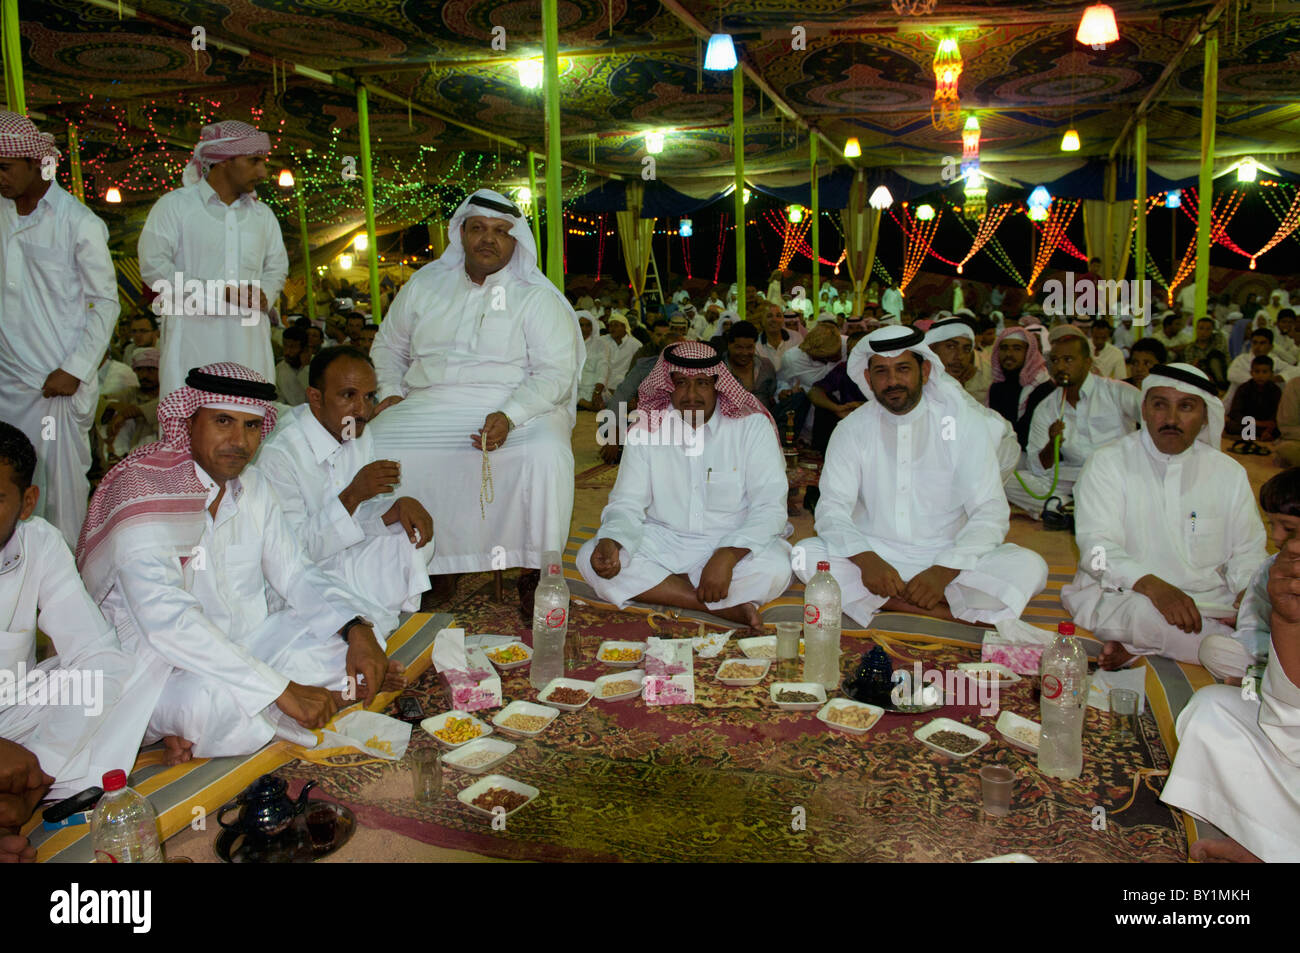 Guests enjoy meal at traditional Bedouin wedding celebration. El Tur, Sinai Peninsula, Egypt Stock Photo